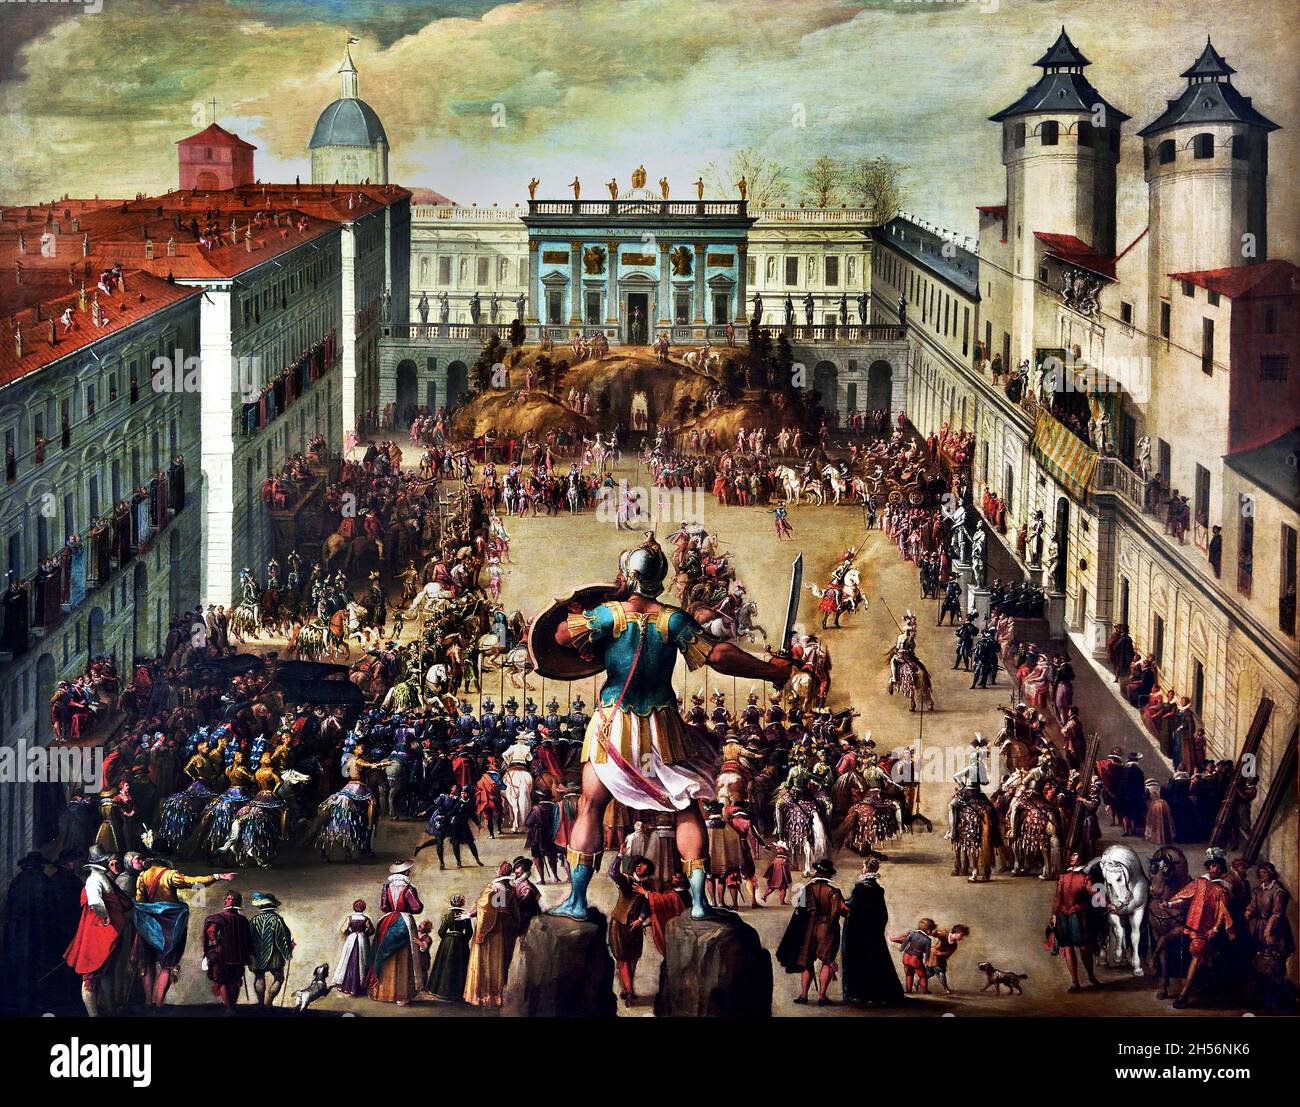 Torneo nella piazza del Castello di Torino 1620 Turnier auf dem Platz des Schlosses von Turin (1620) Tempesta Antonio, 1555 - 1630- Italien , Italienisch, Stockfoto